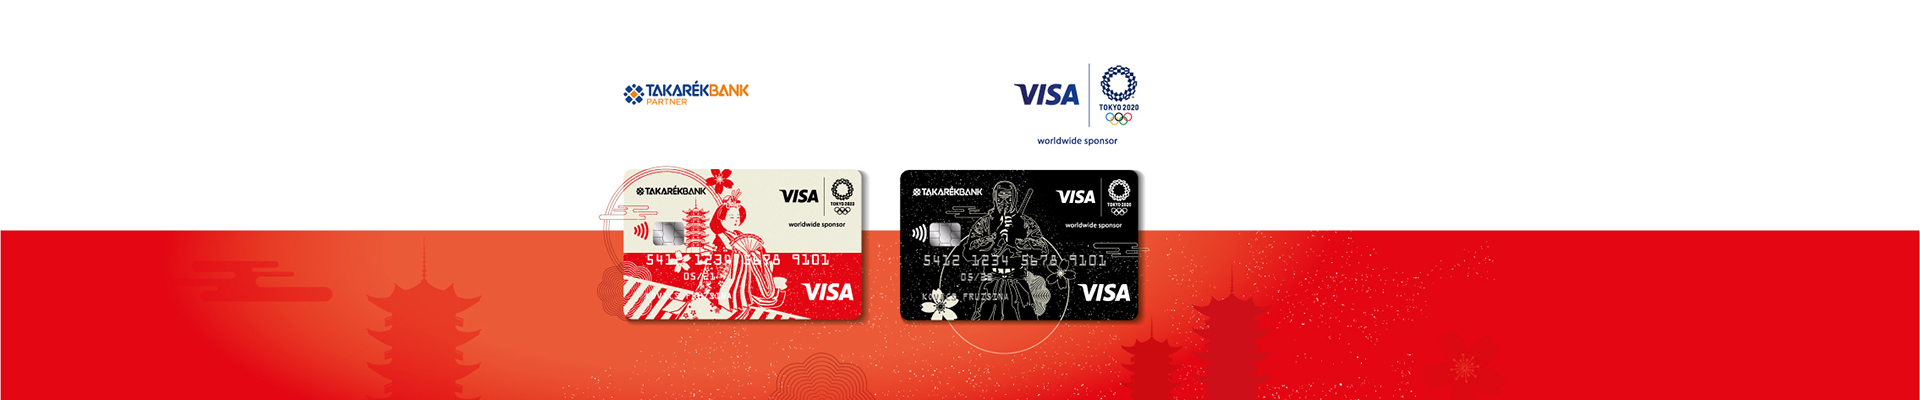 Takarekbank_Olympic_bankcard_promotion_Posta_website_slider_1920x400